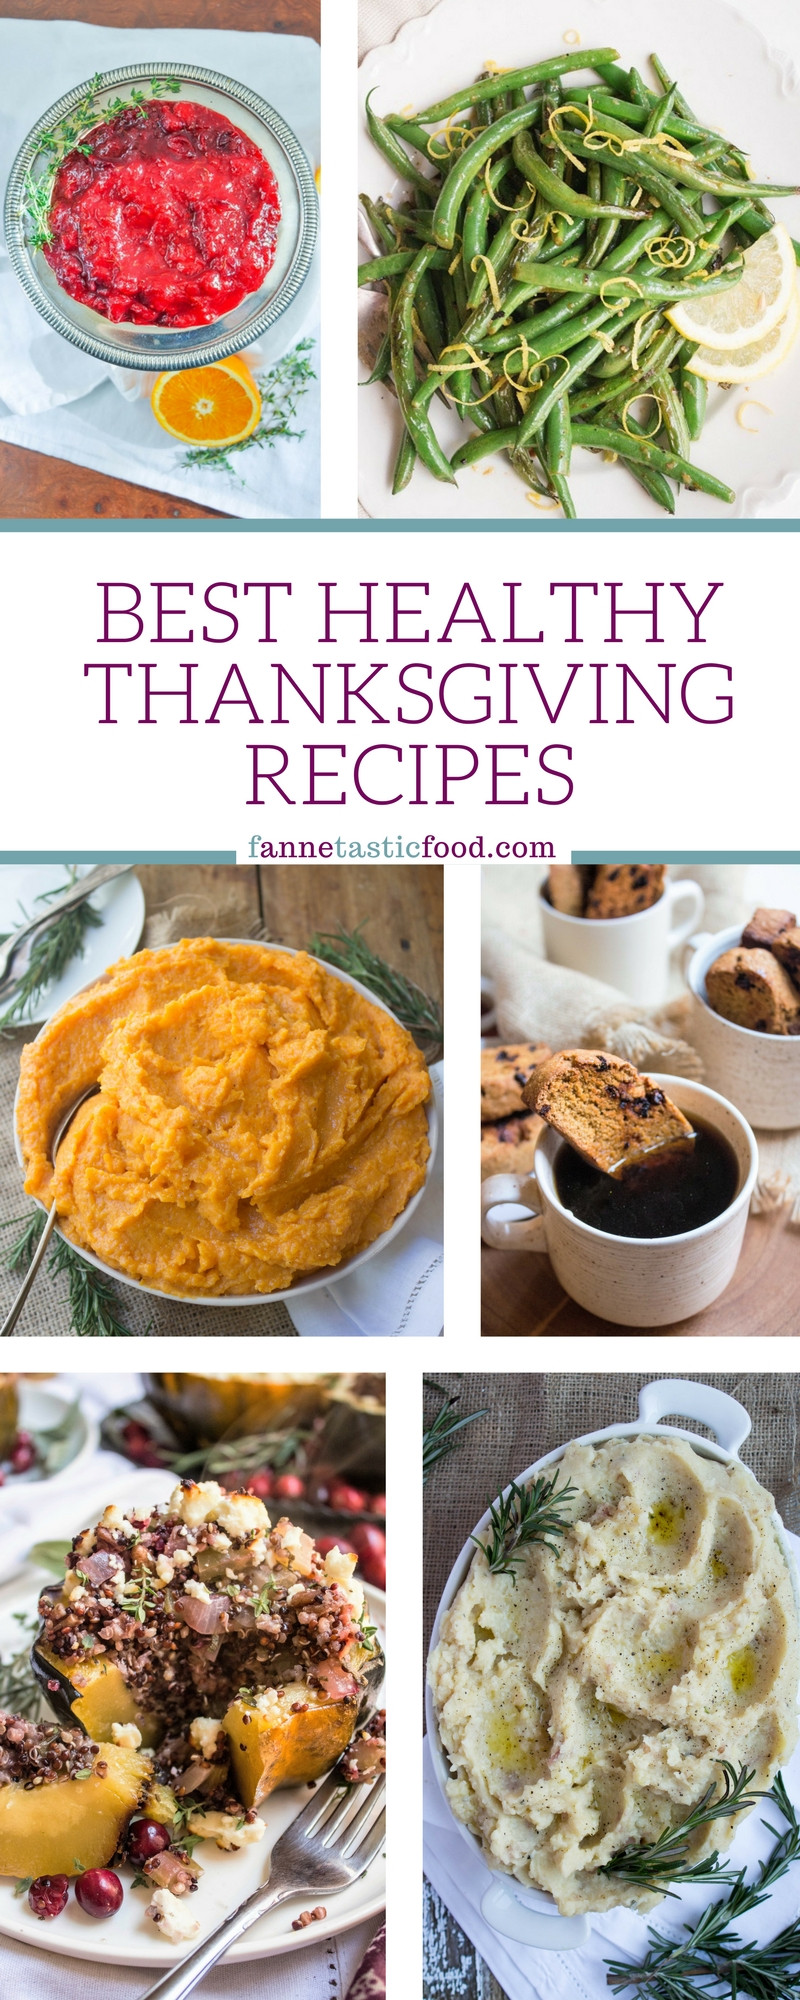 Healthy Thanksgiving Turkey Recipes
 Best Healthy Thanksgiving Recipes